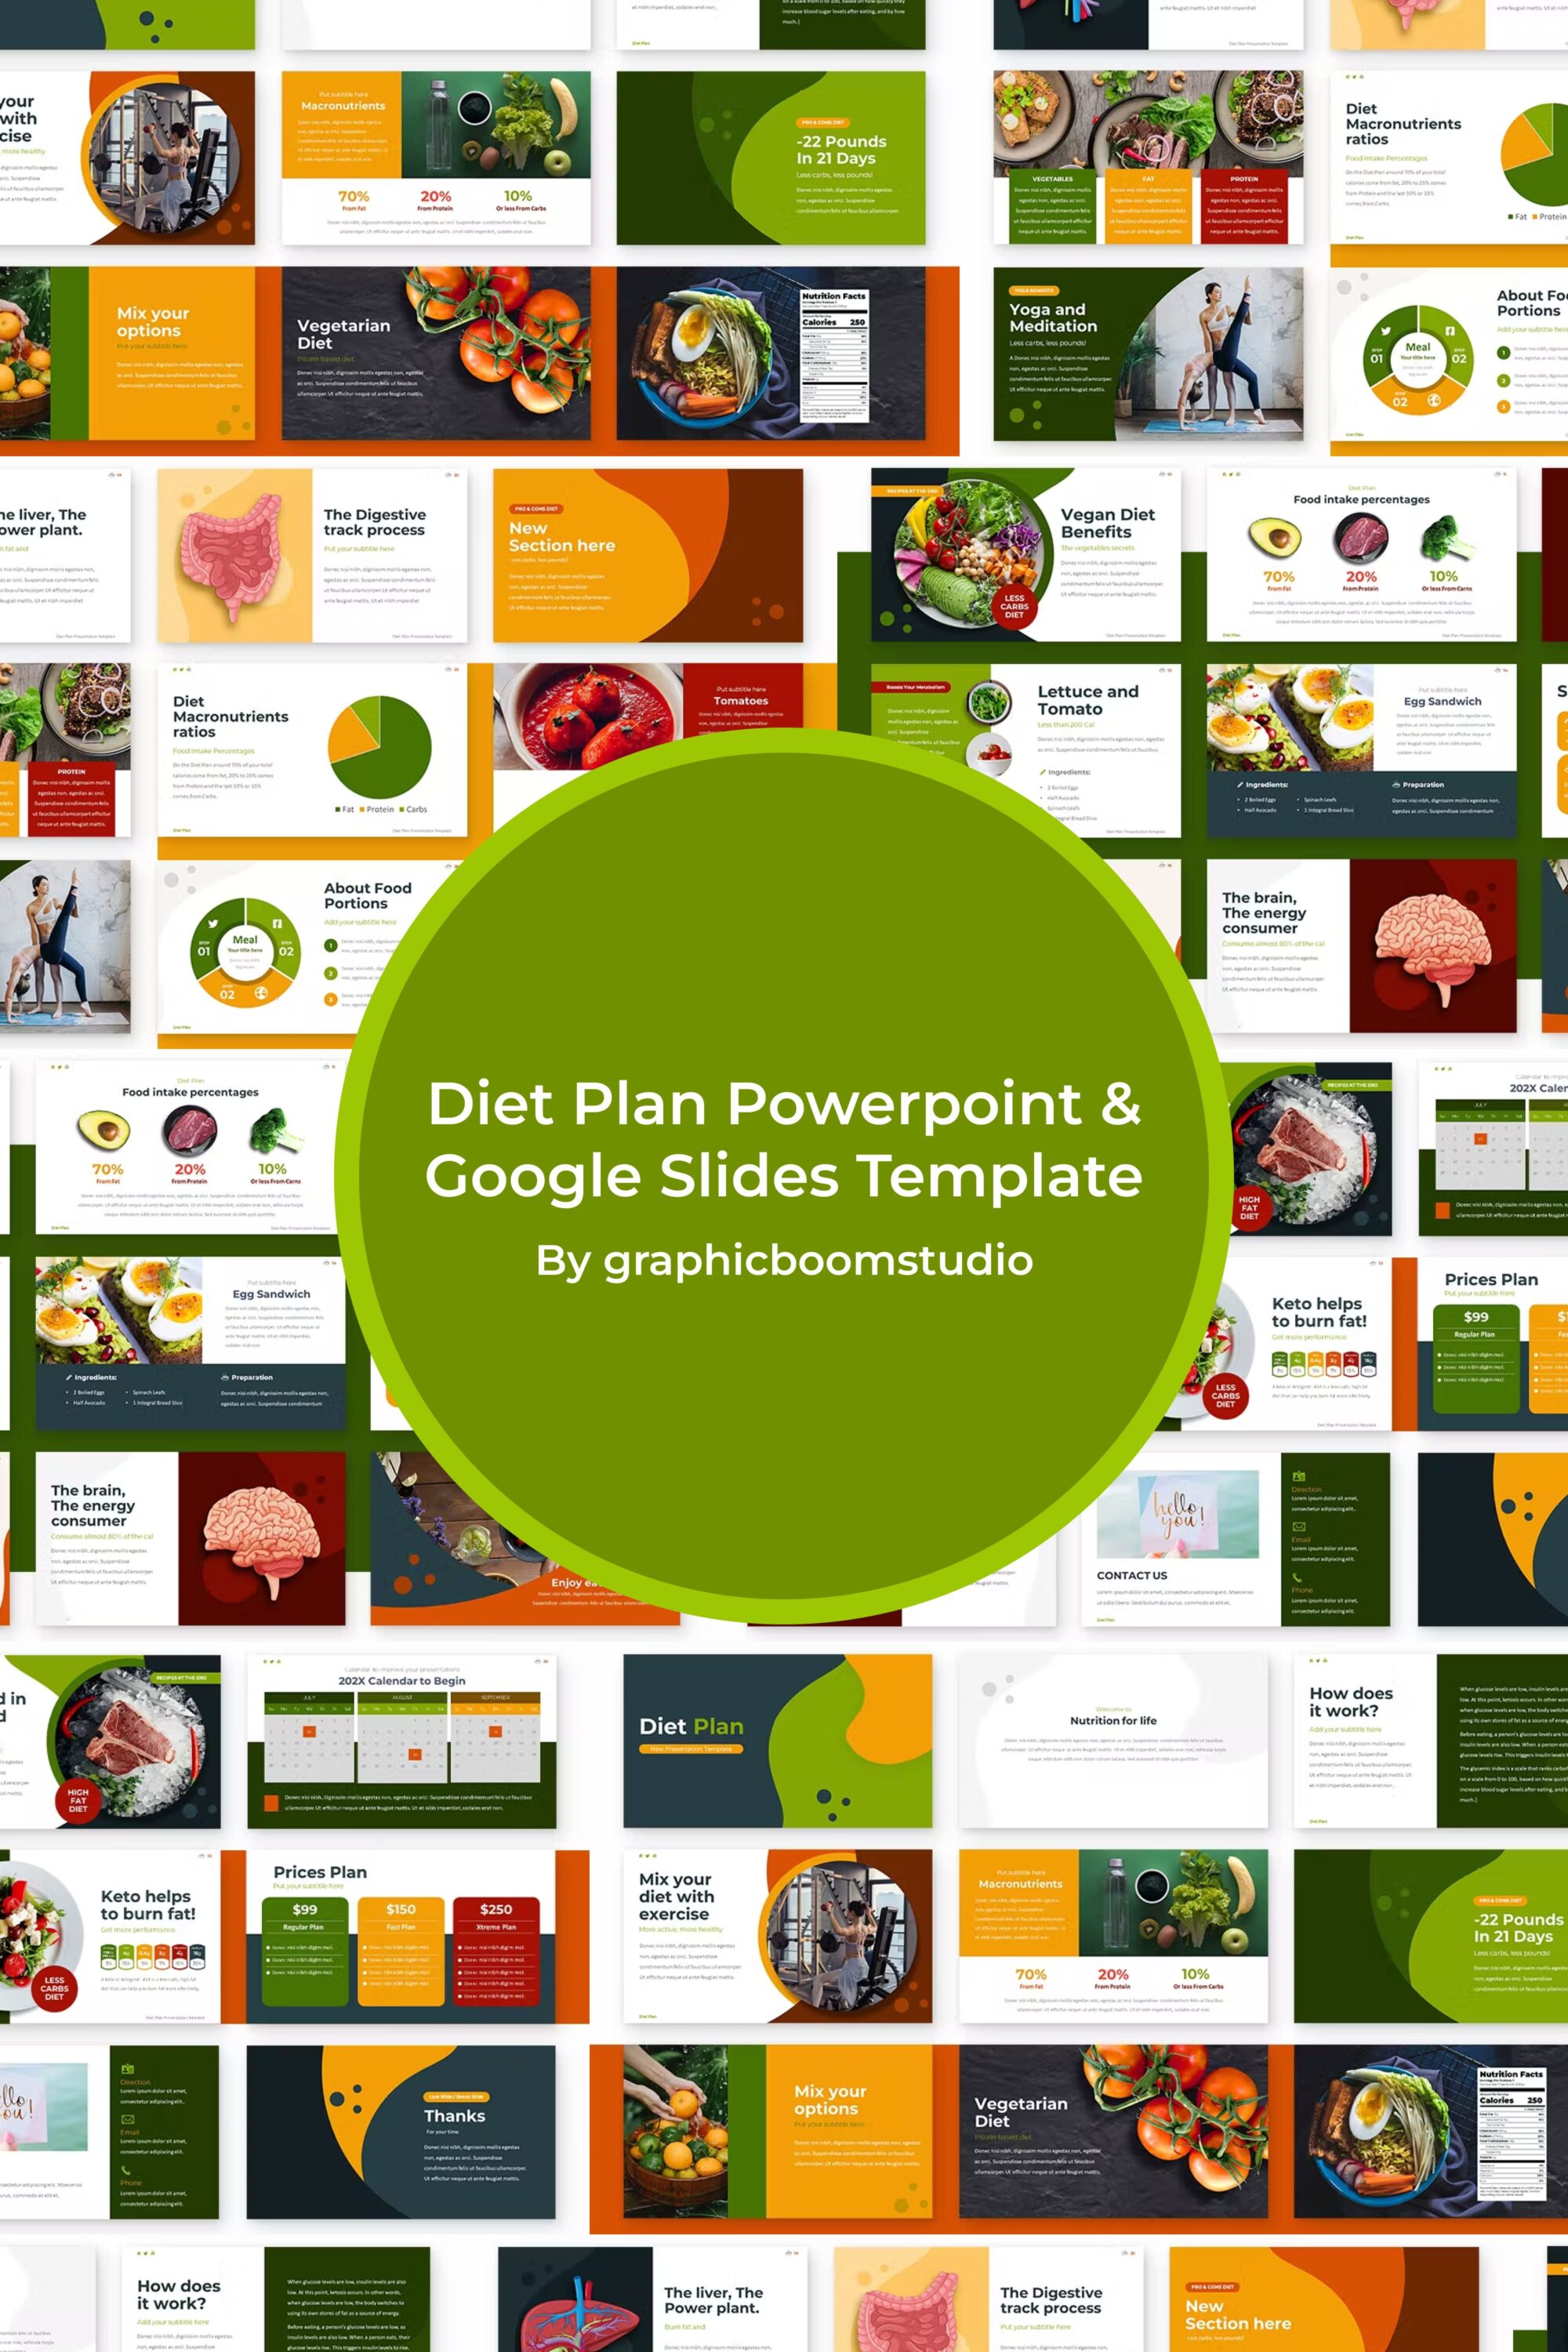 Diet Plan Powerpoint & Google Slides Template - pinterest image preview.